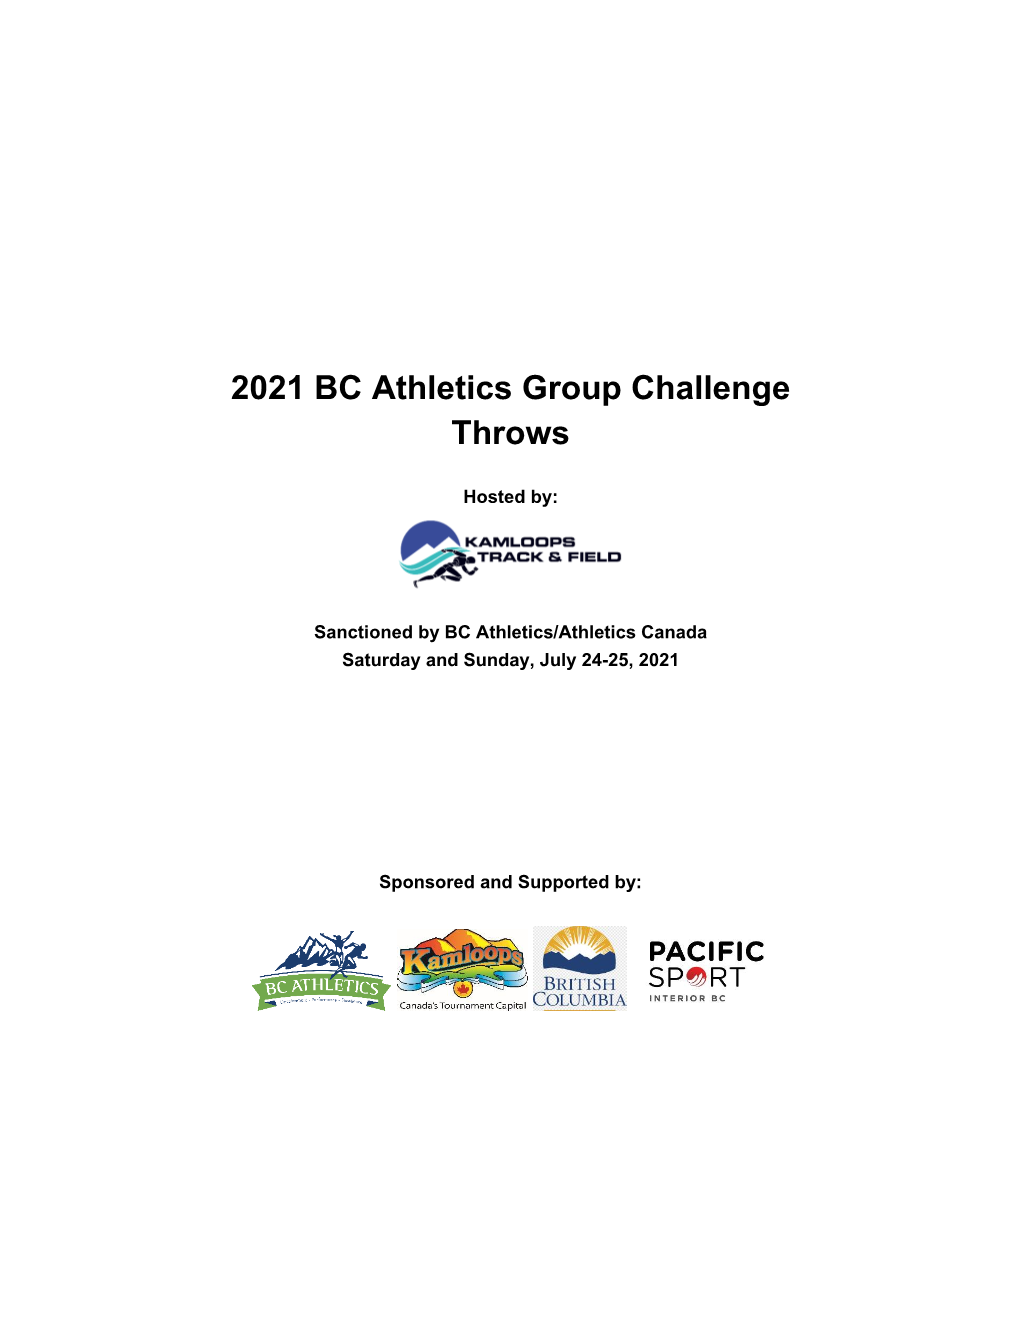 2021 BC Athletics Group Challenge Throws